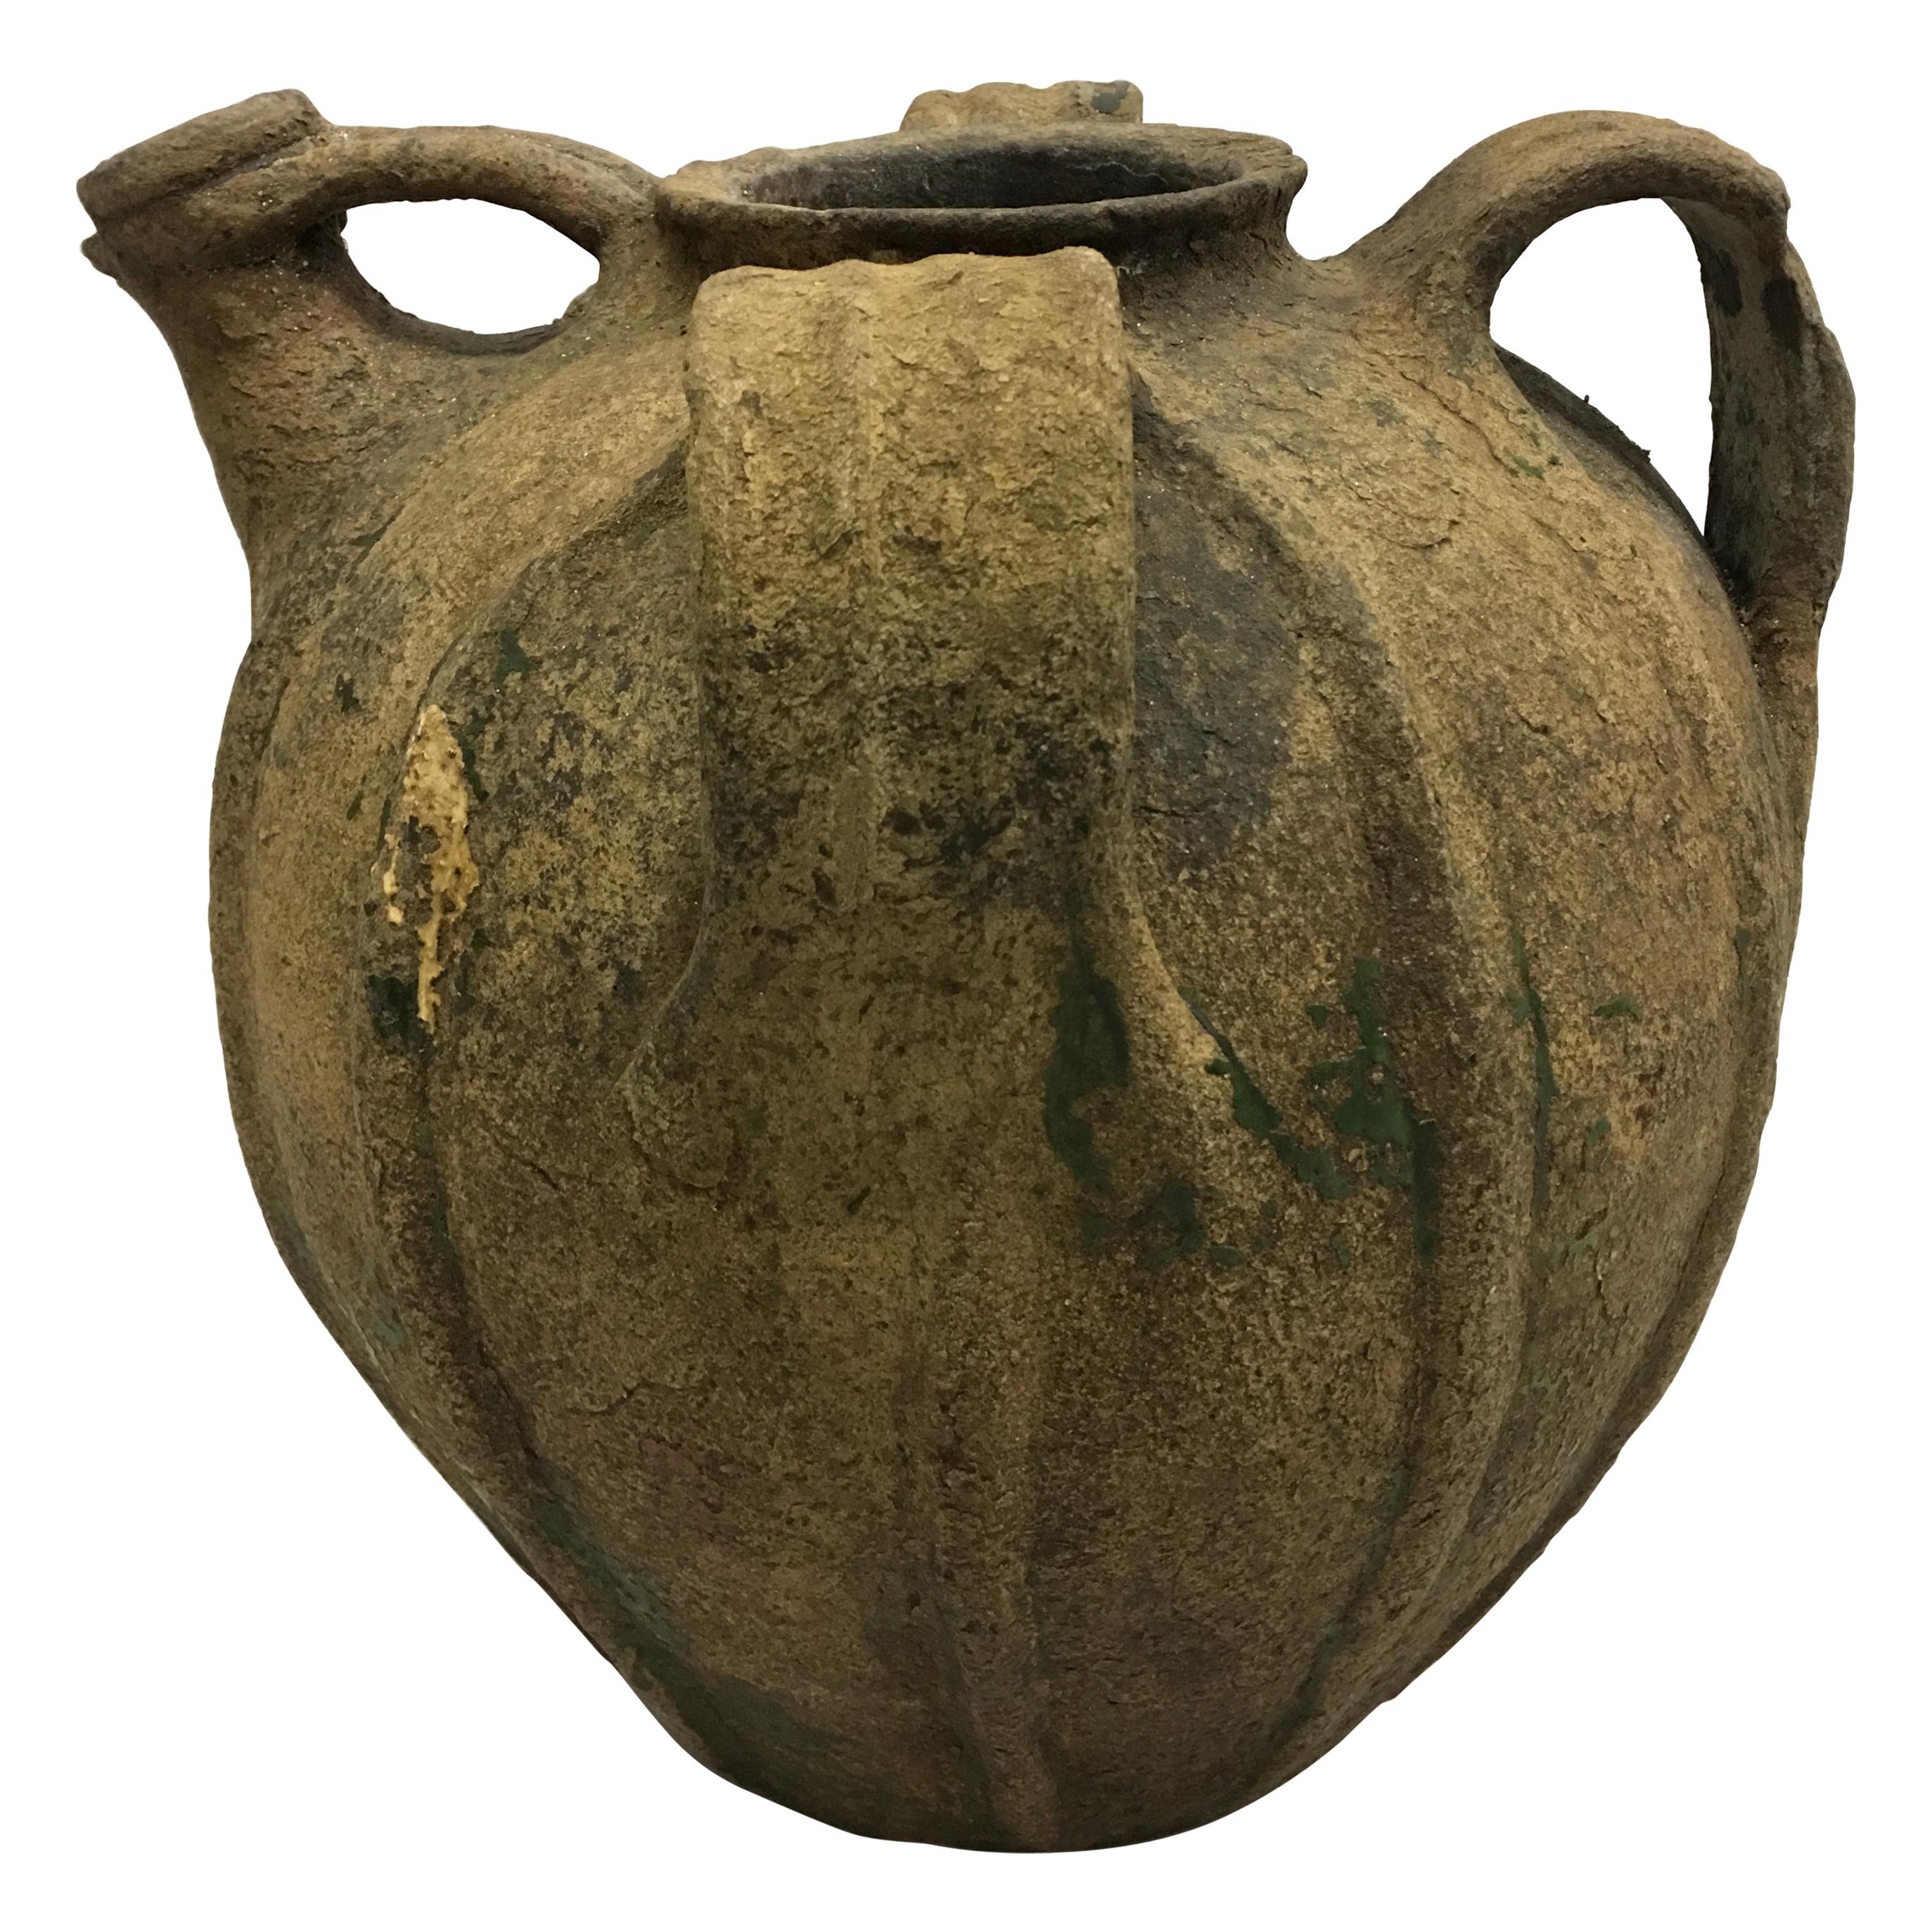 Große große französische Provinz-Keramikurne / Vase / Krug, 18. Jahrhundert